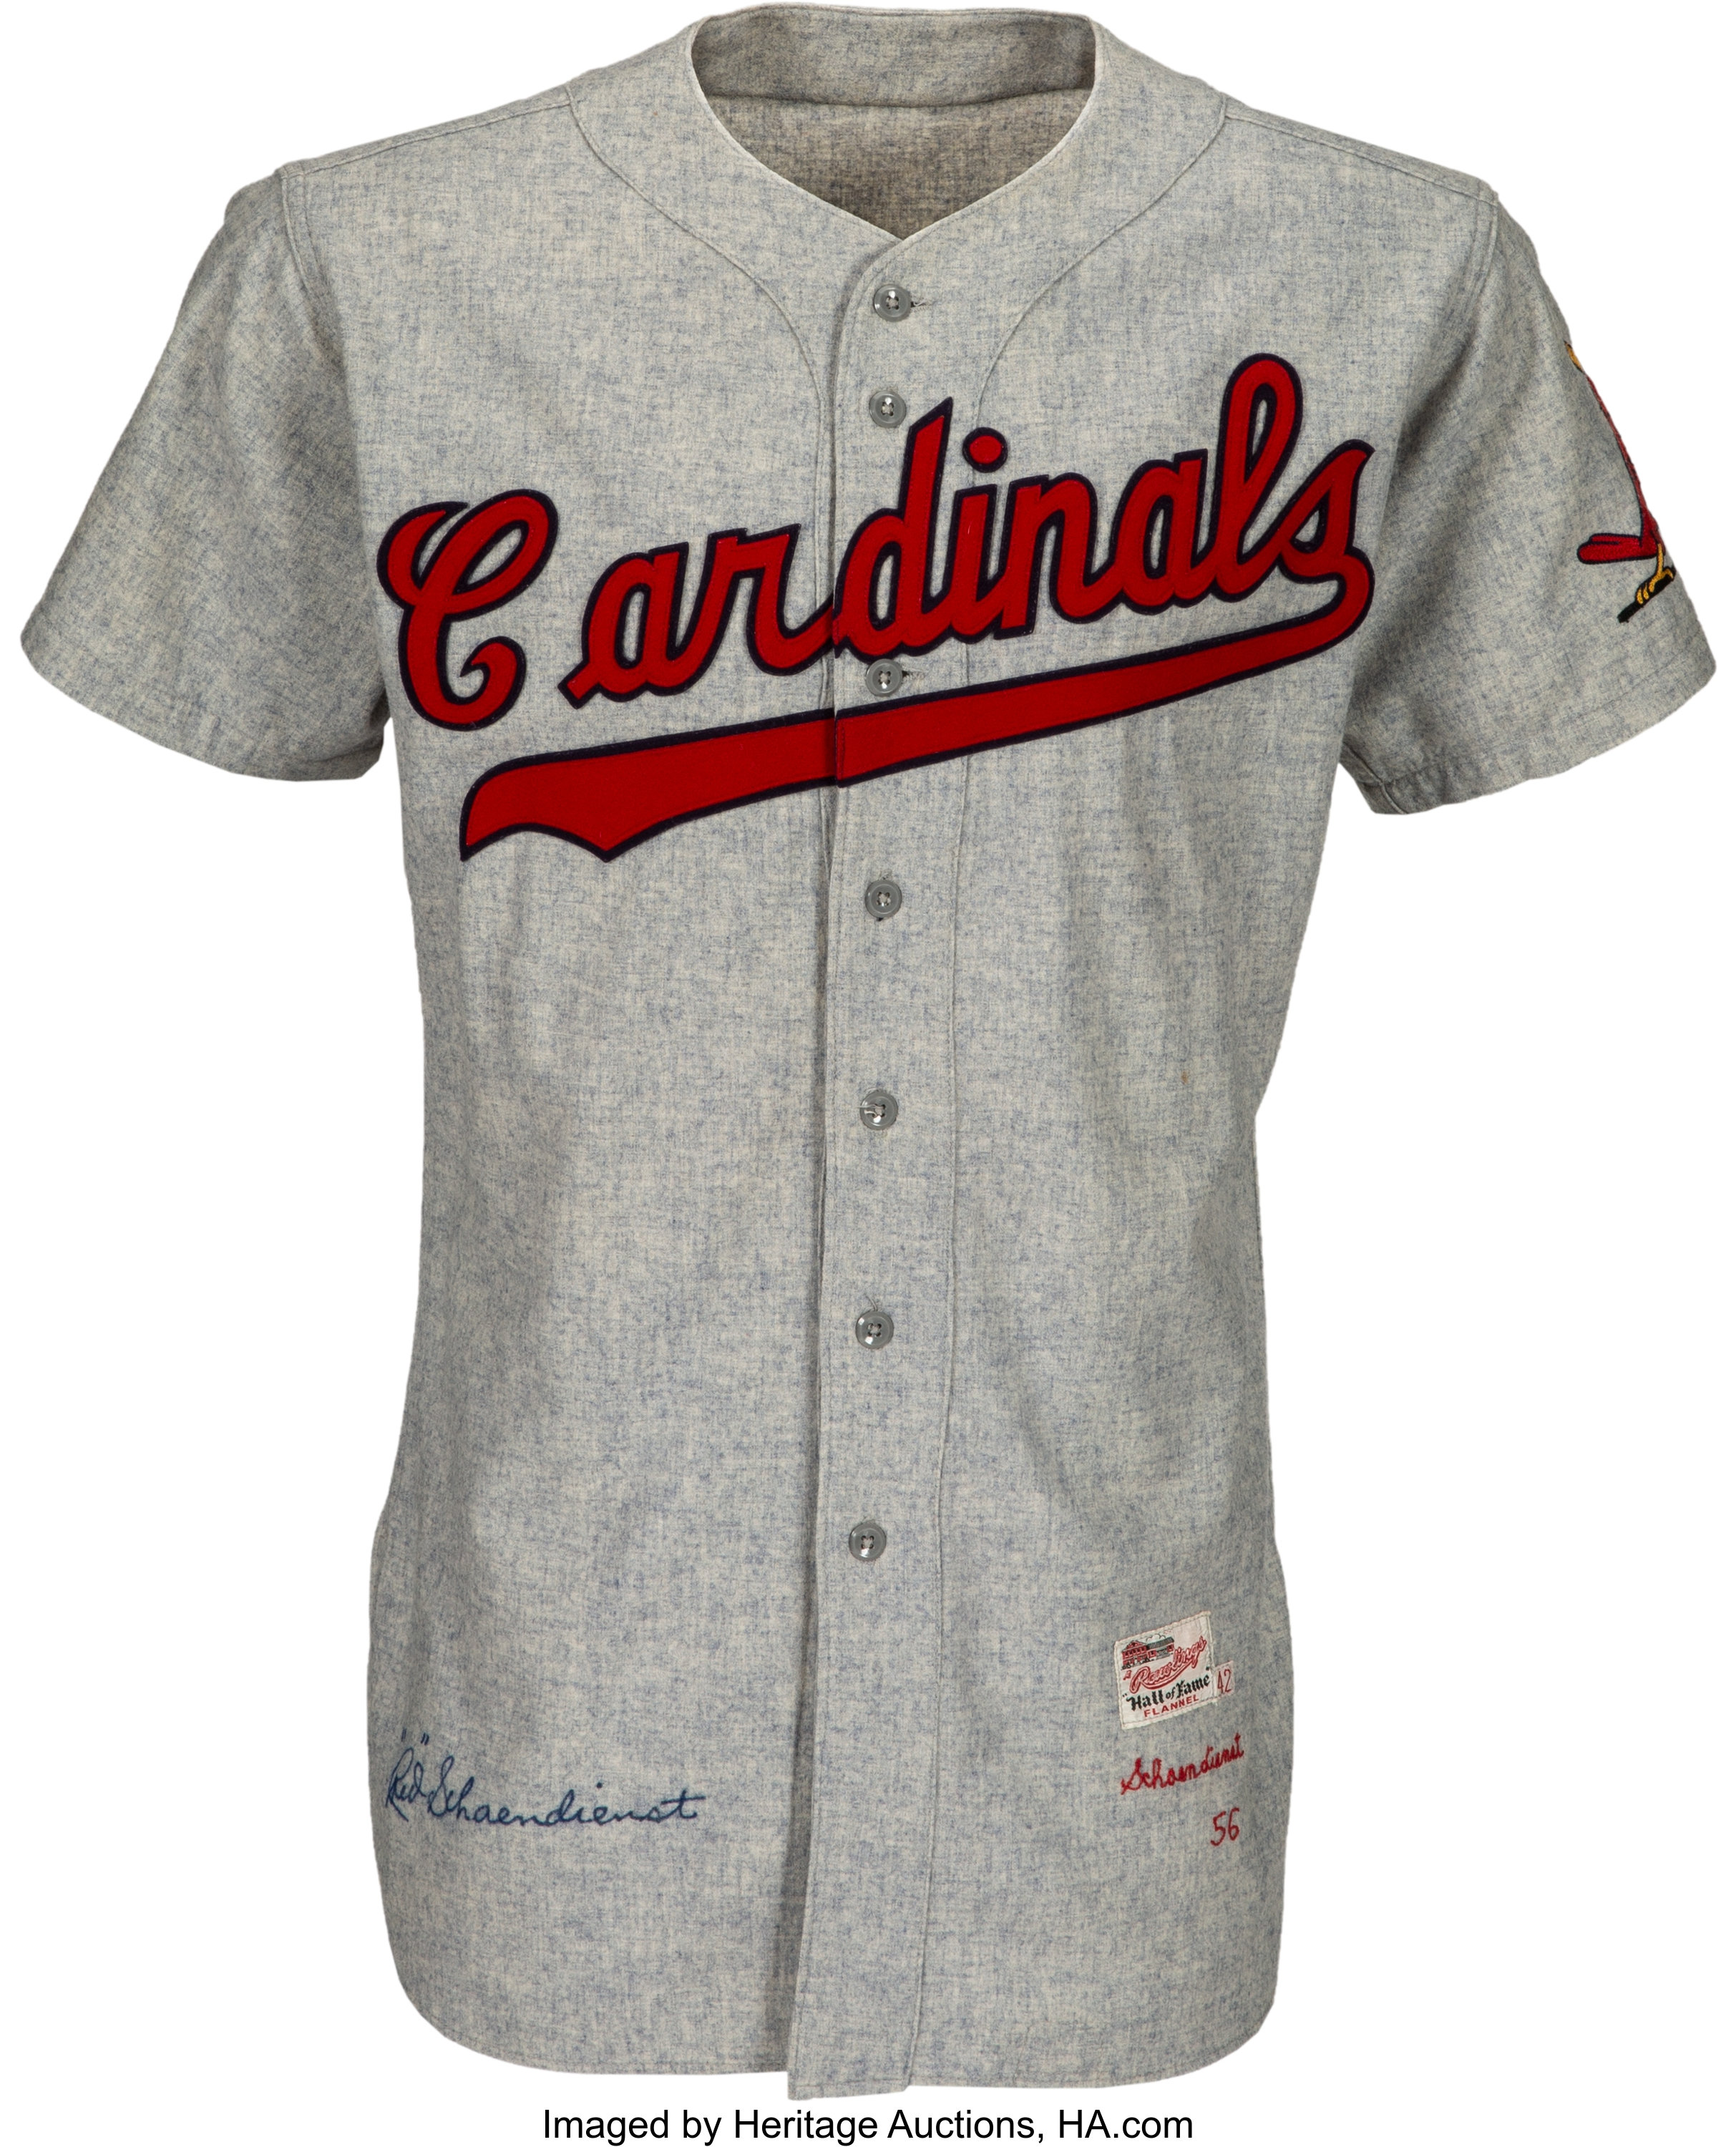 St. Louis Cardinals - We're loving these uniforms! ❤️